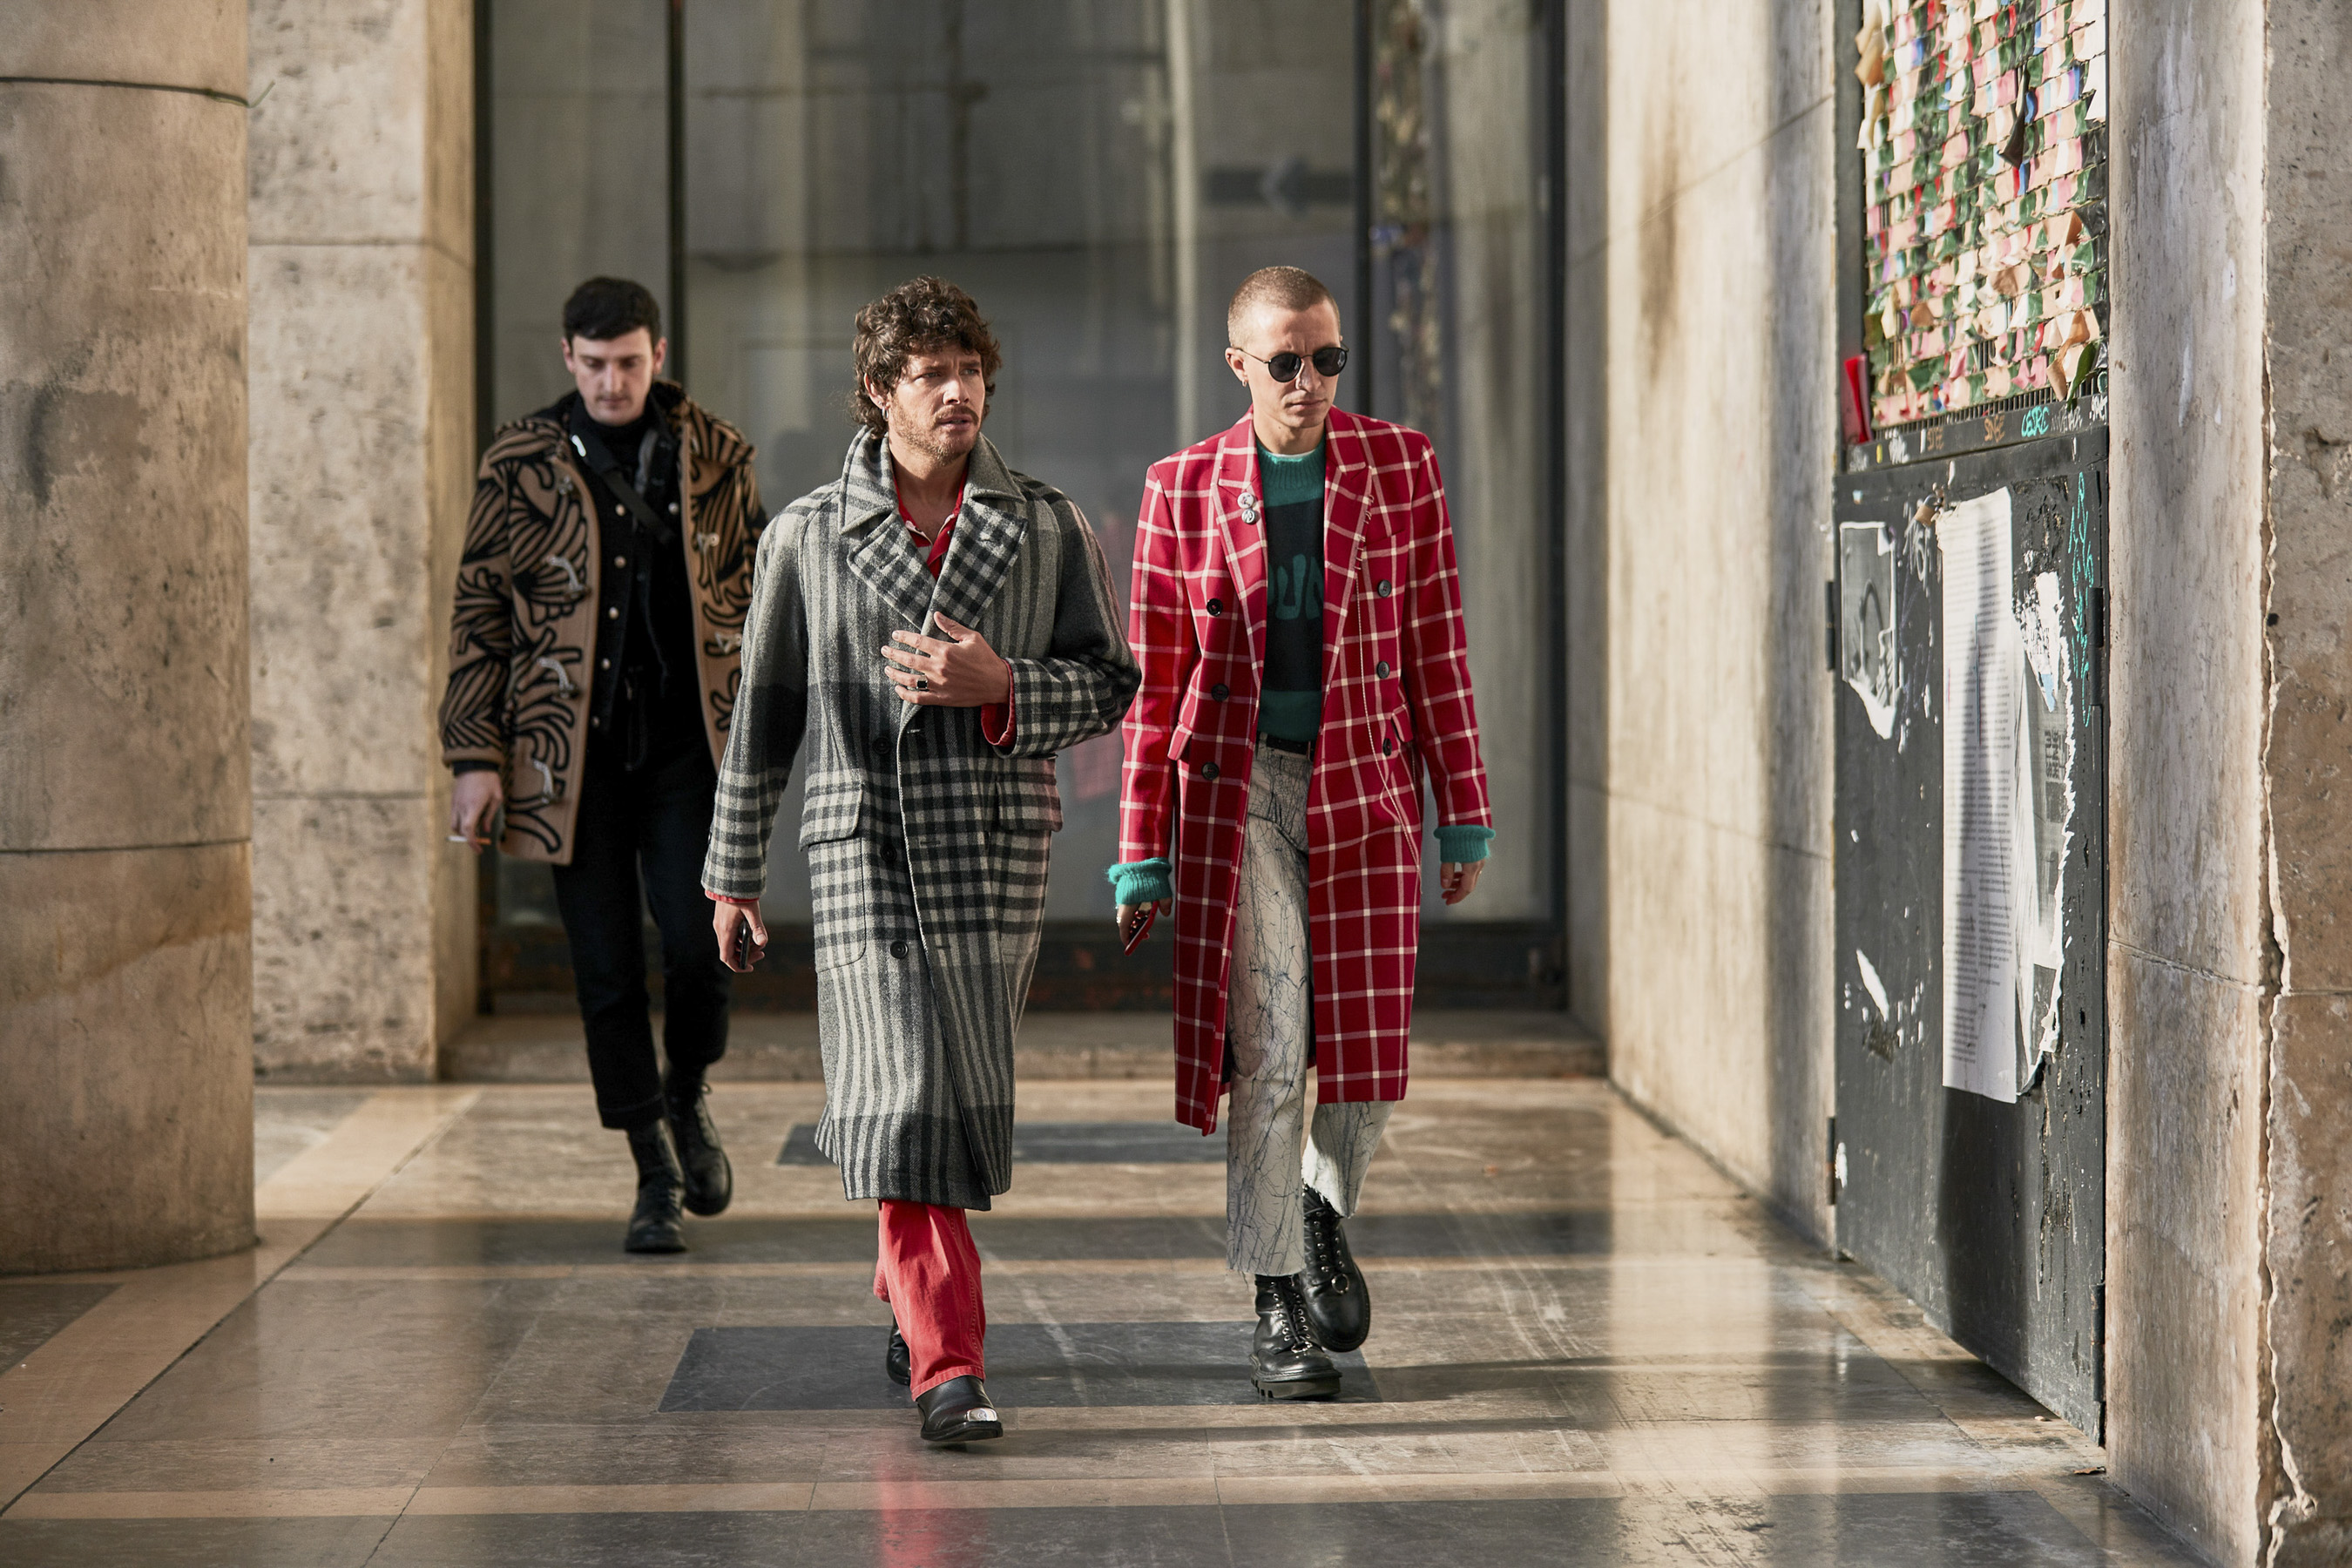 Street Style at Paris Fashion Week Men's Fall 2019 [PHOTOS